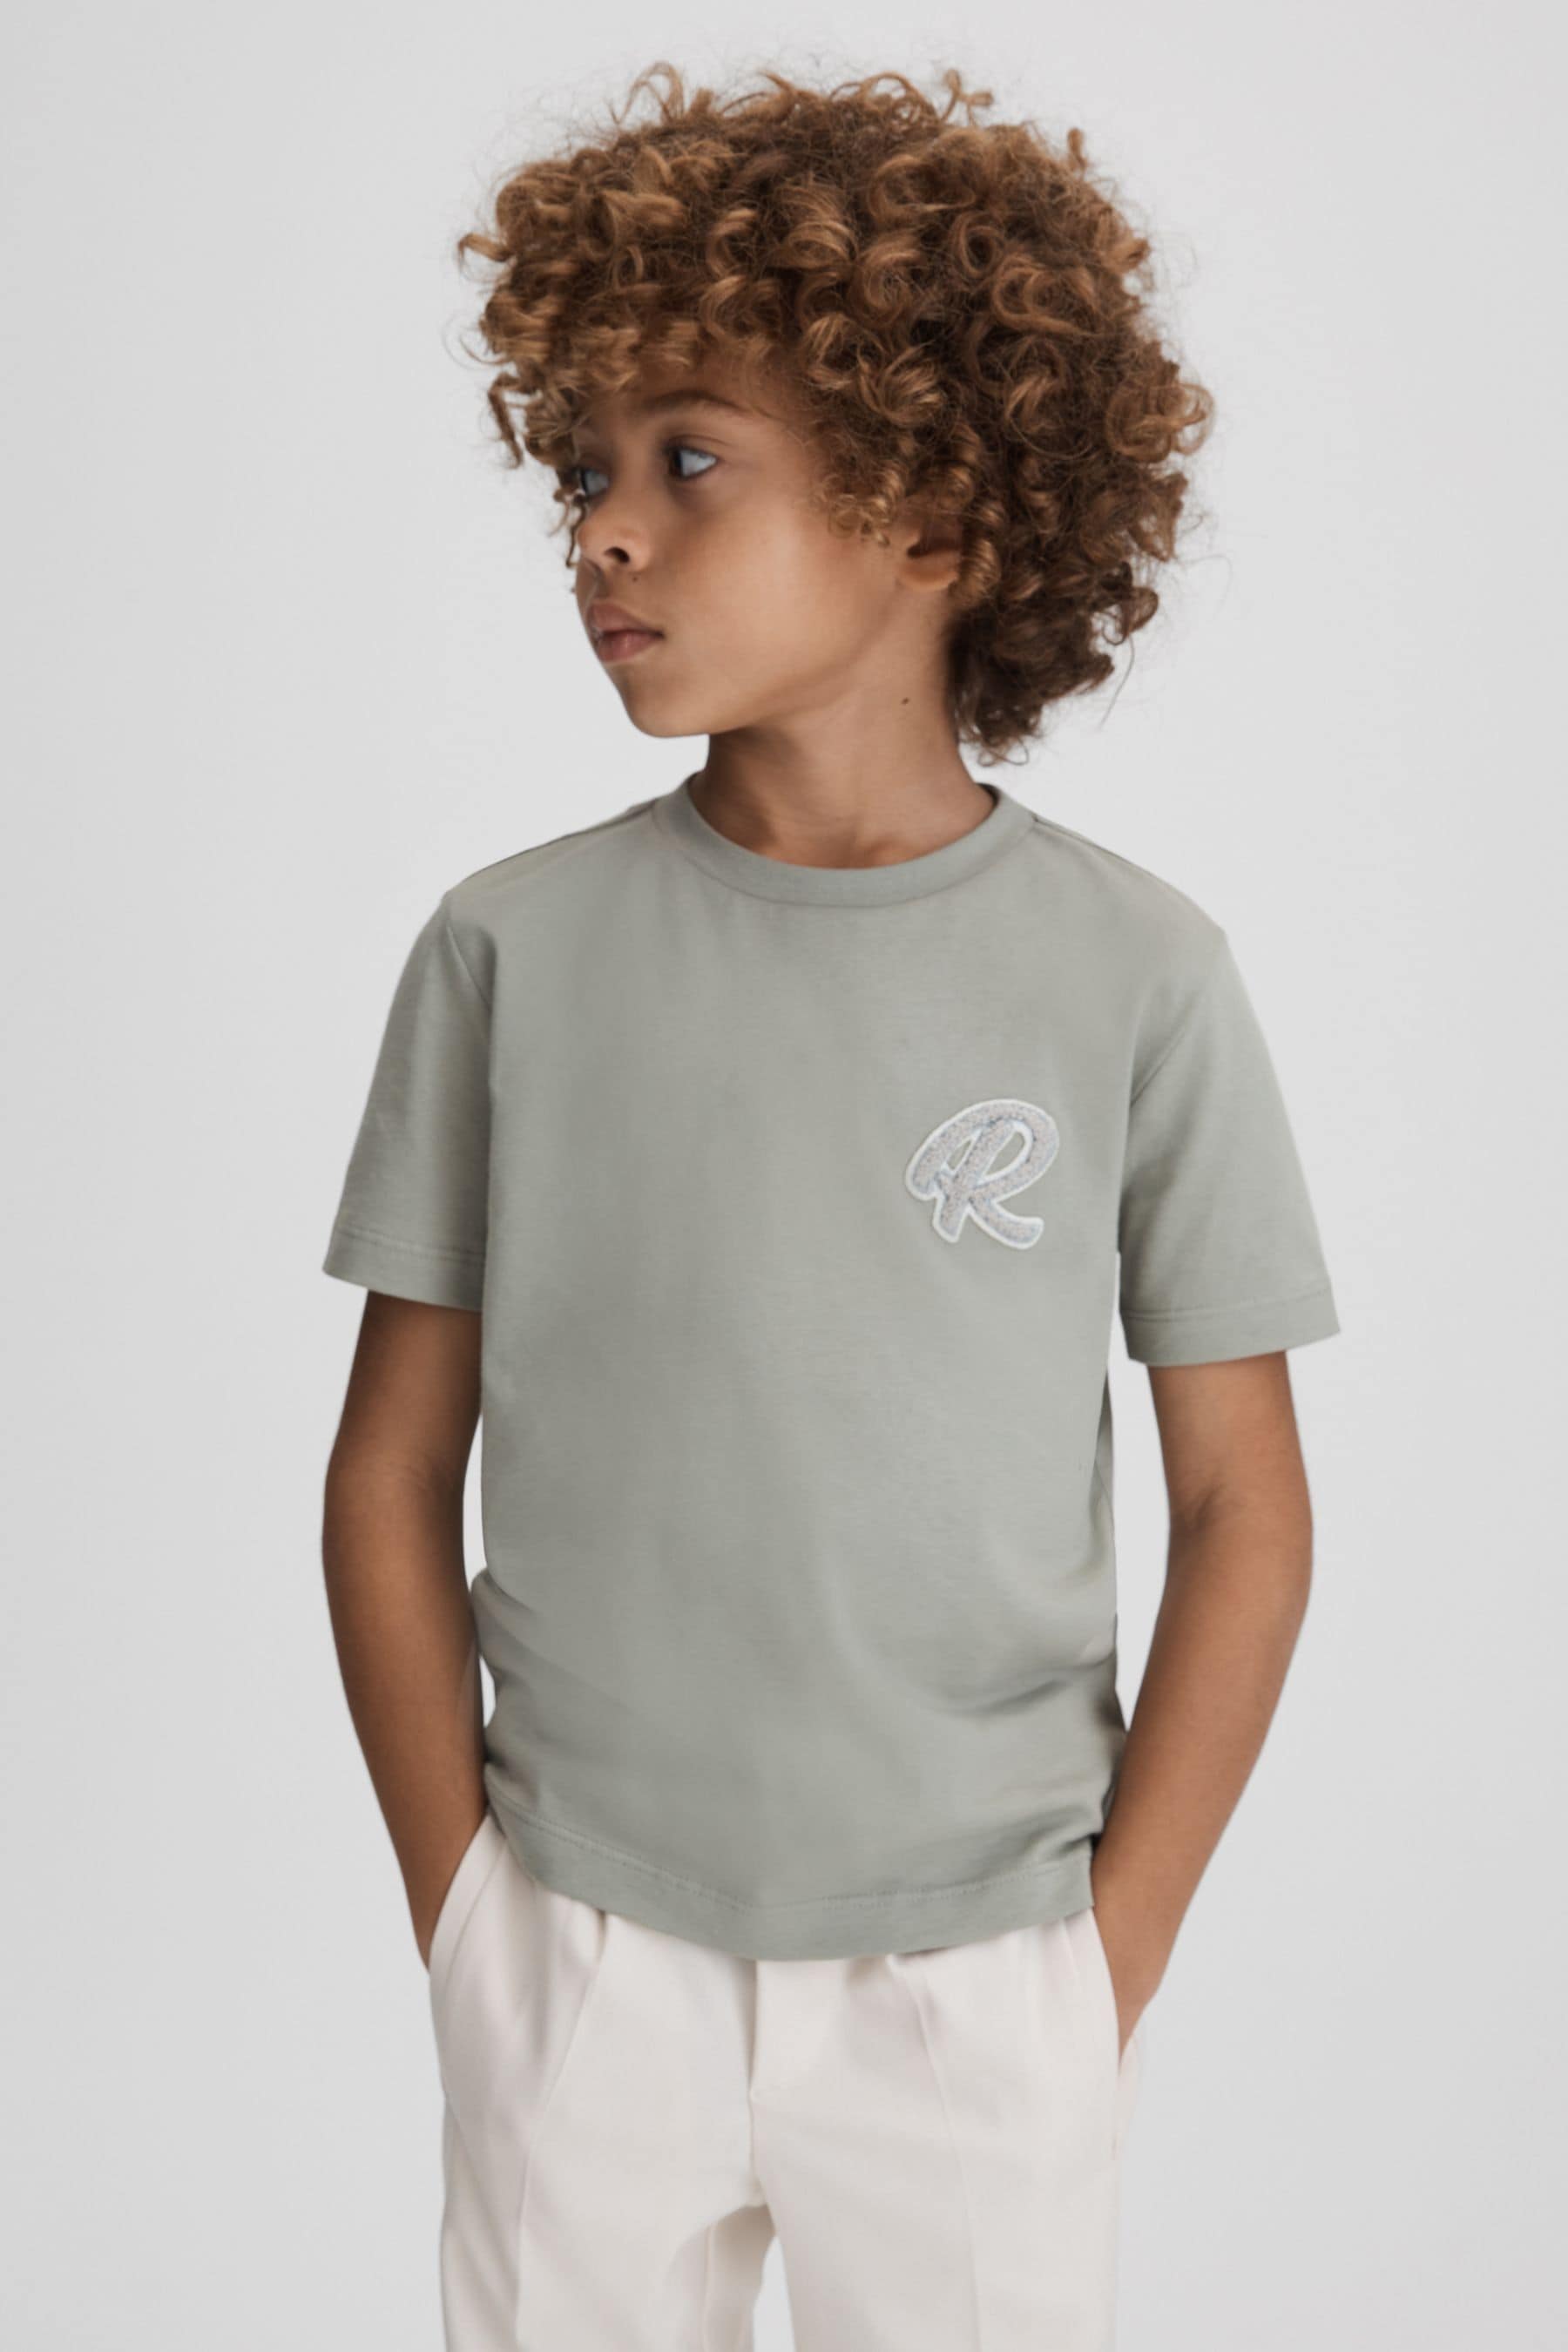 Reiss Jude - Pistachio Junior Cotton Crew Neck T-shirt, Uk 12-13 Yrs